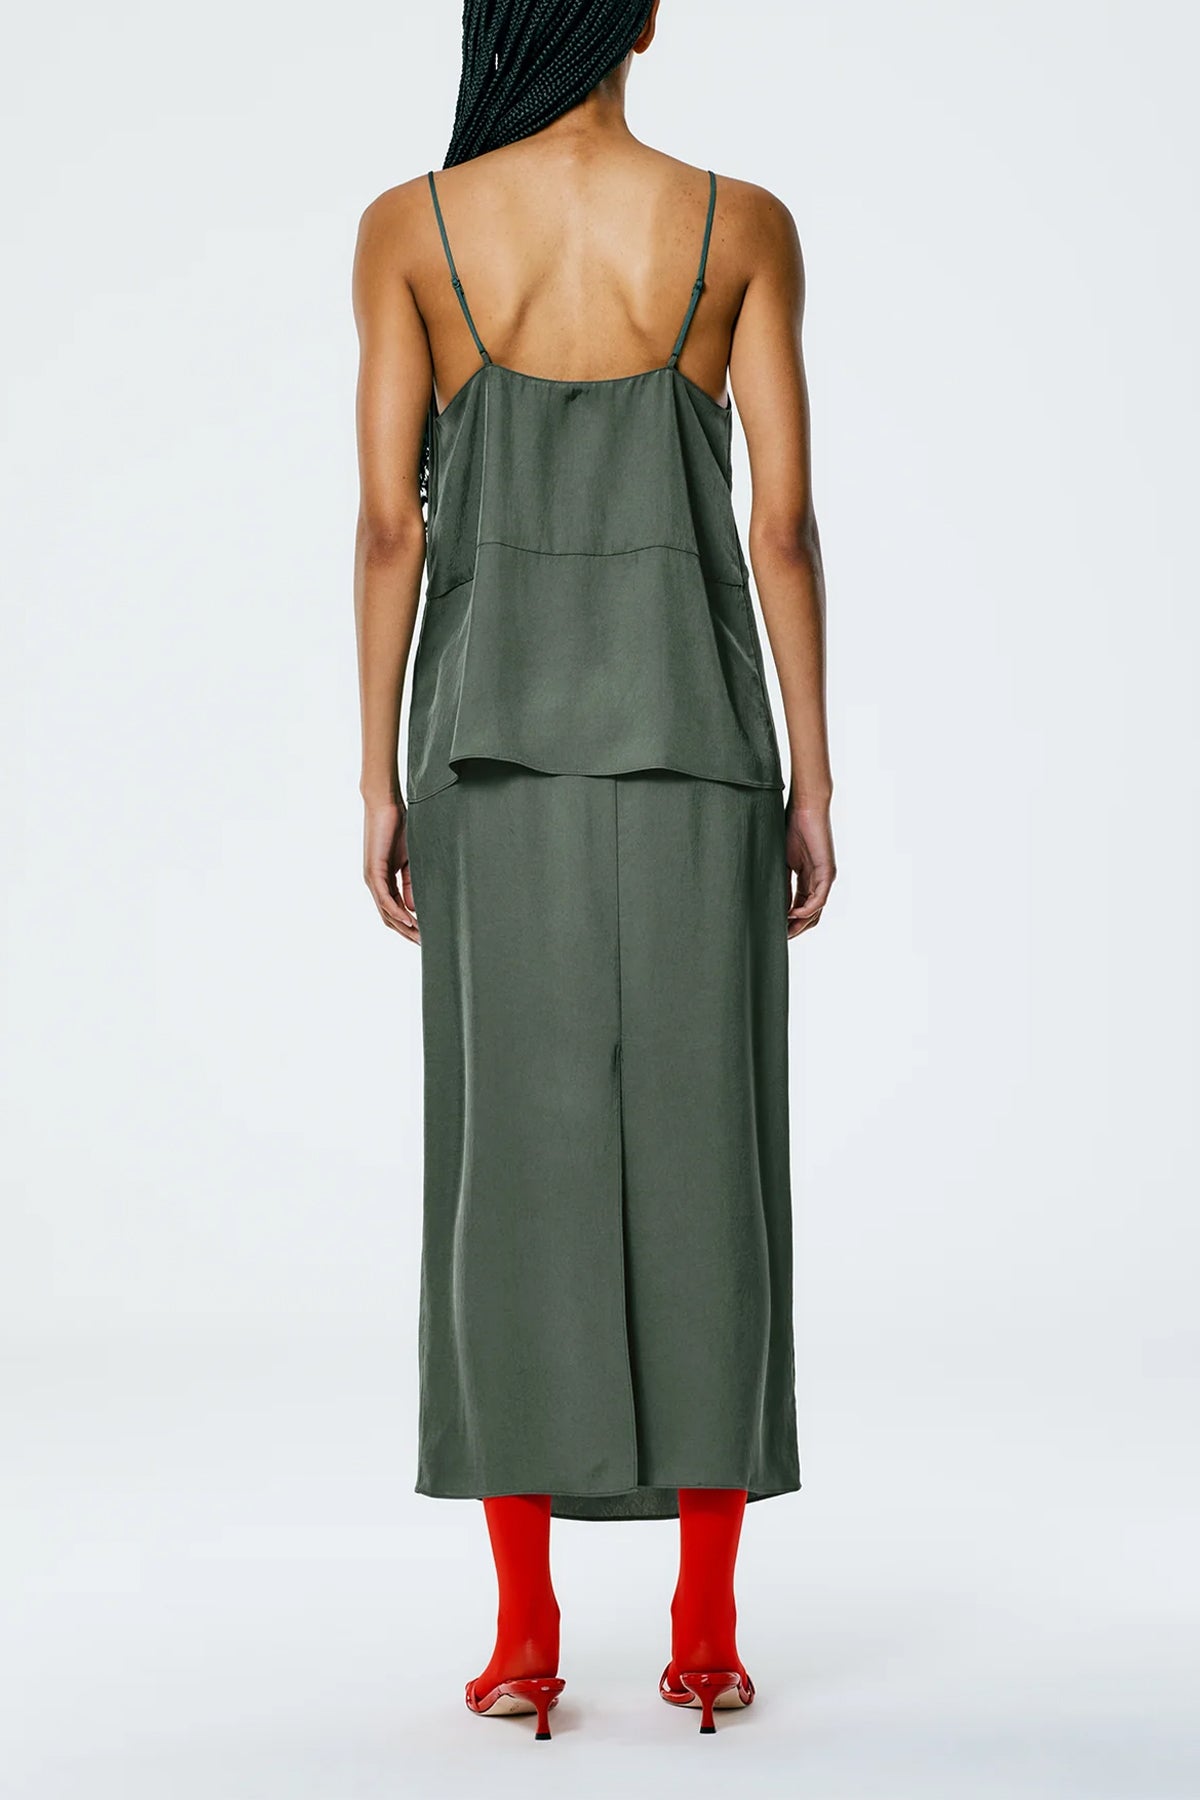 The Slip Skirt in Grey Pine - shop-olivia.com